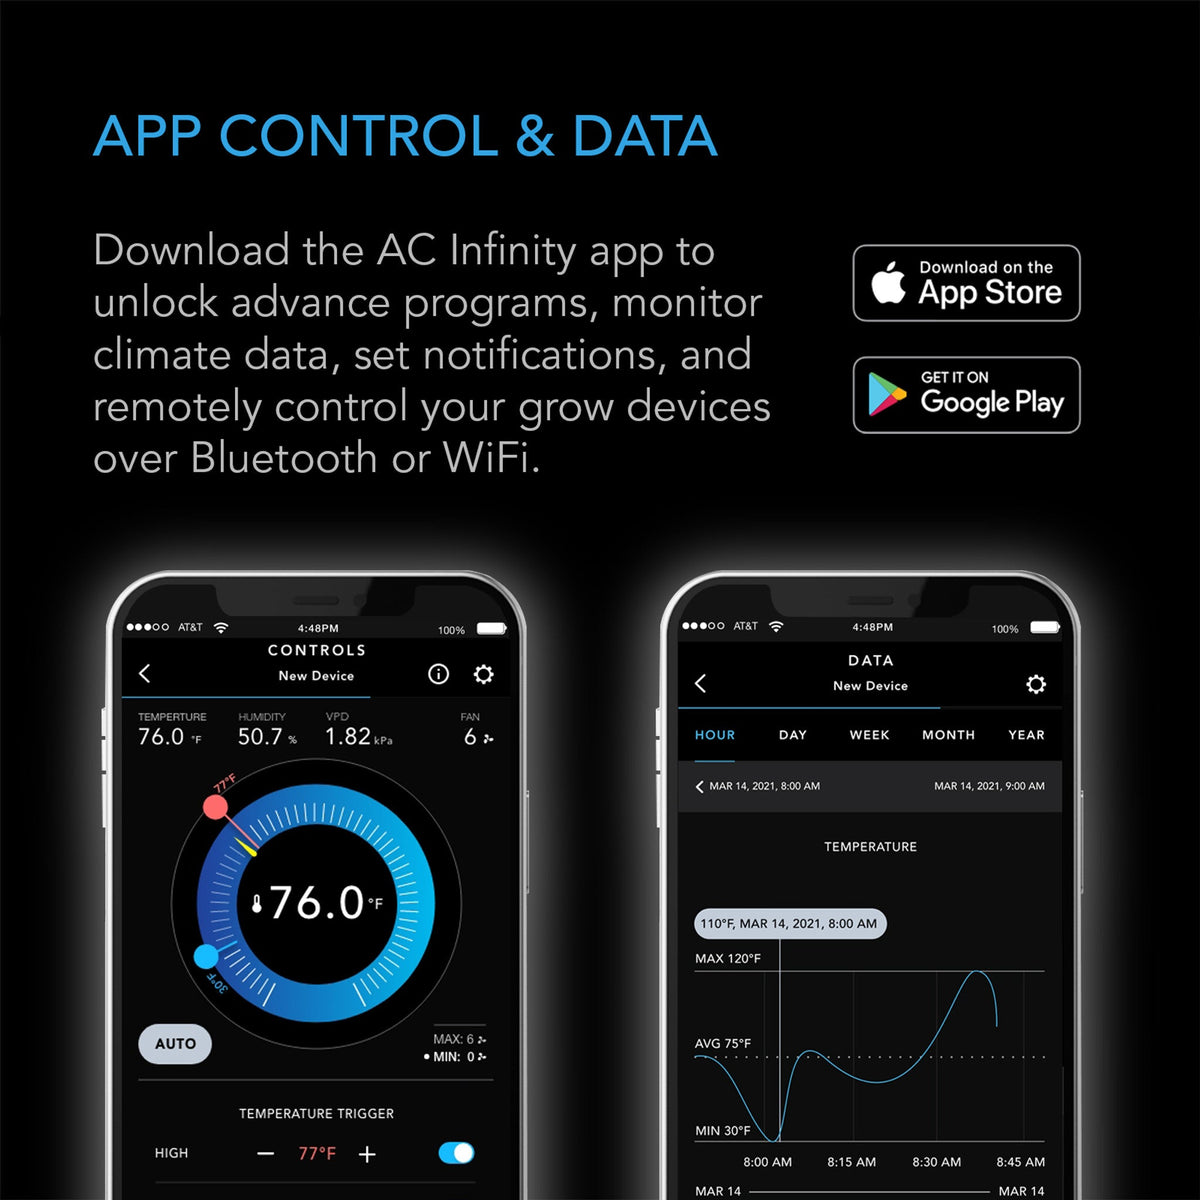 ACInfinity Smart Controller 69Pro Plus App